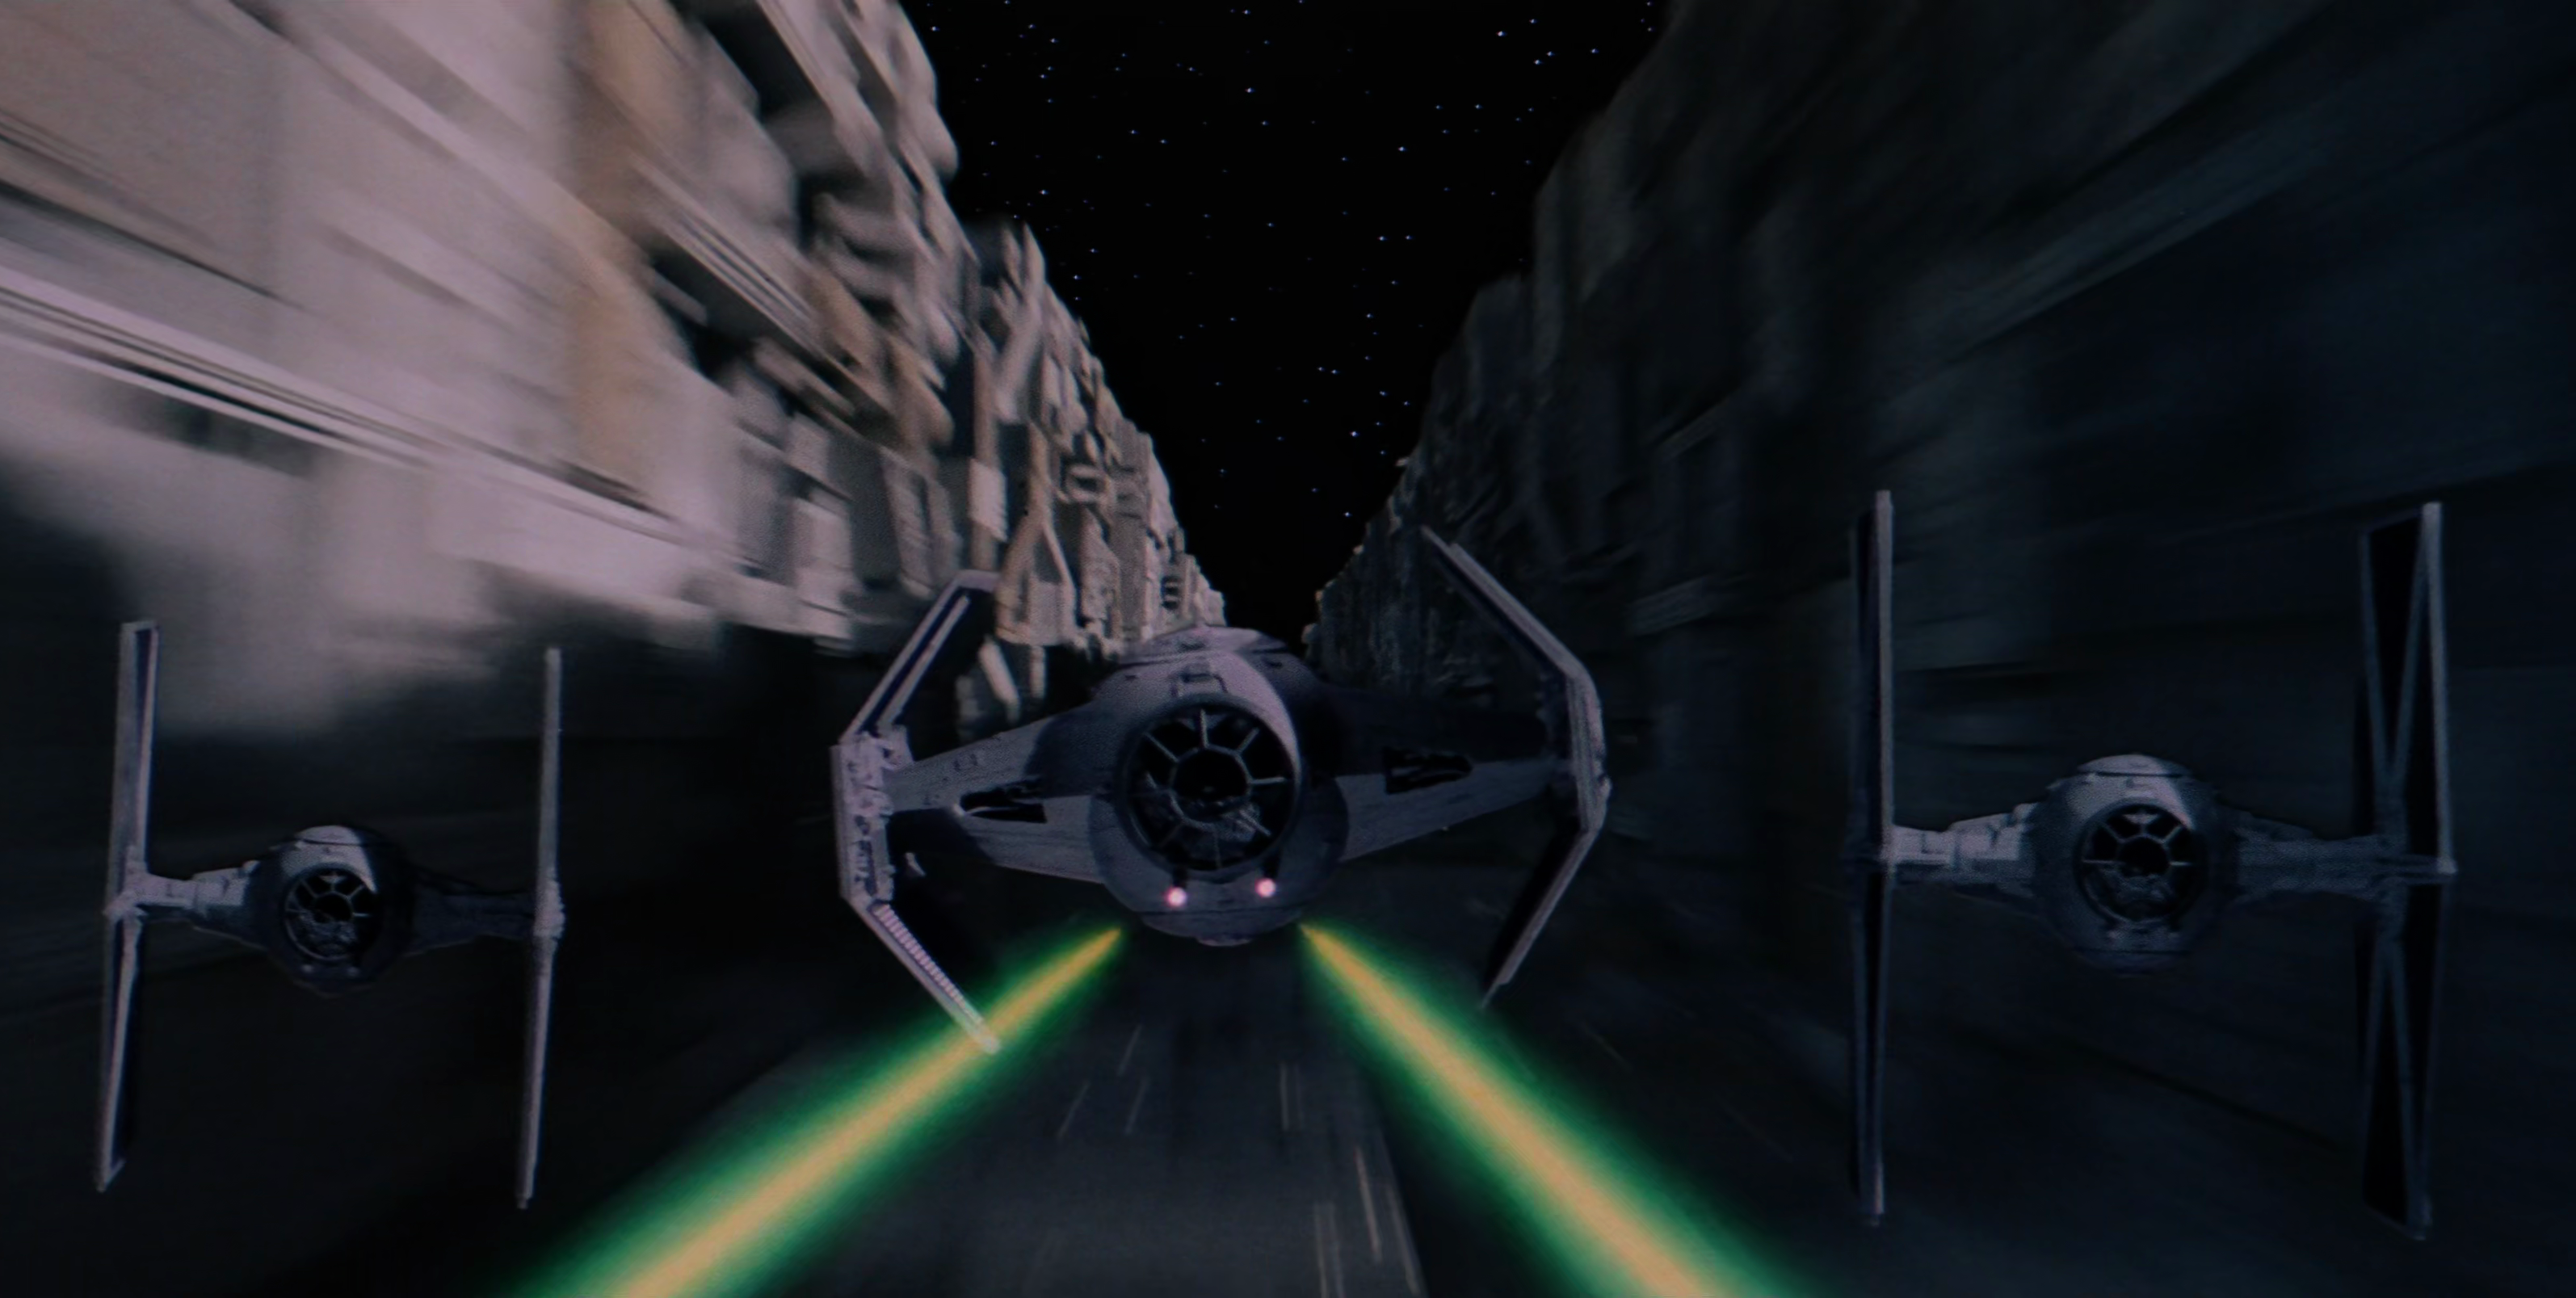 Amazoncom: Star Wars the Force Unleashed - Xbox 360